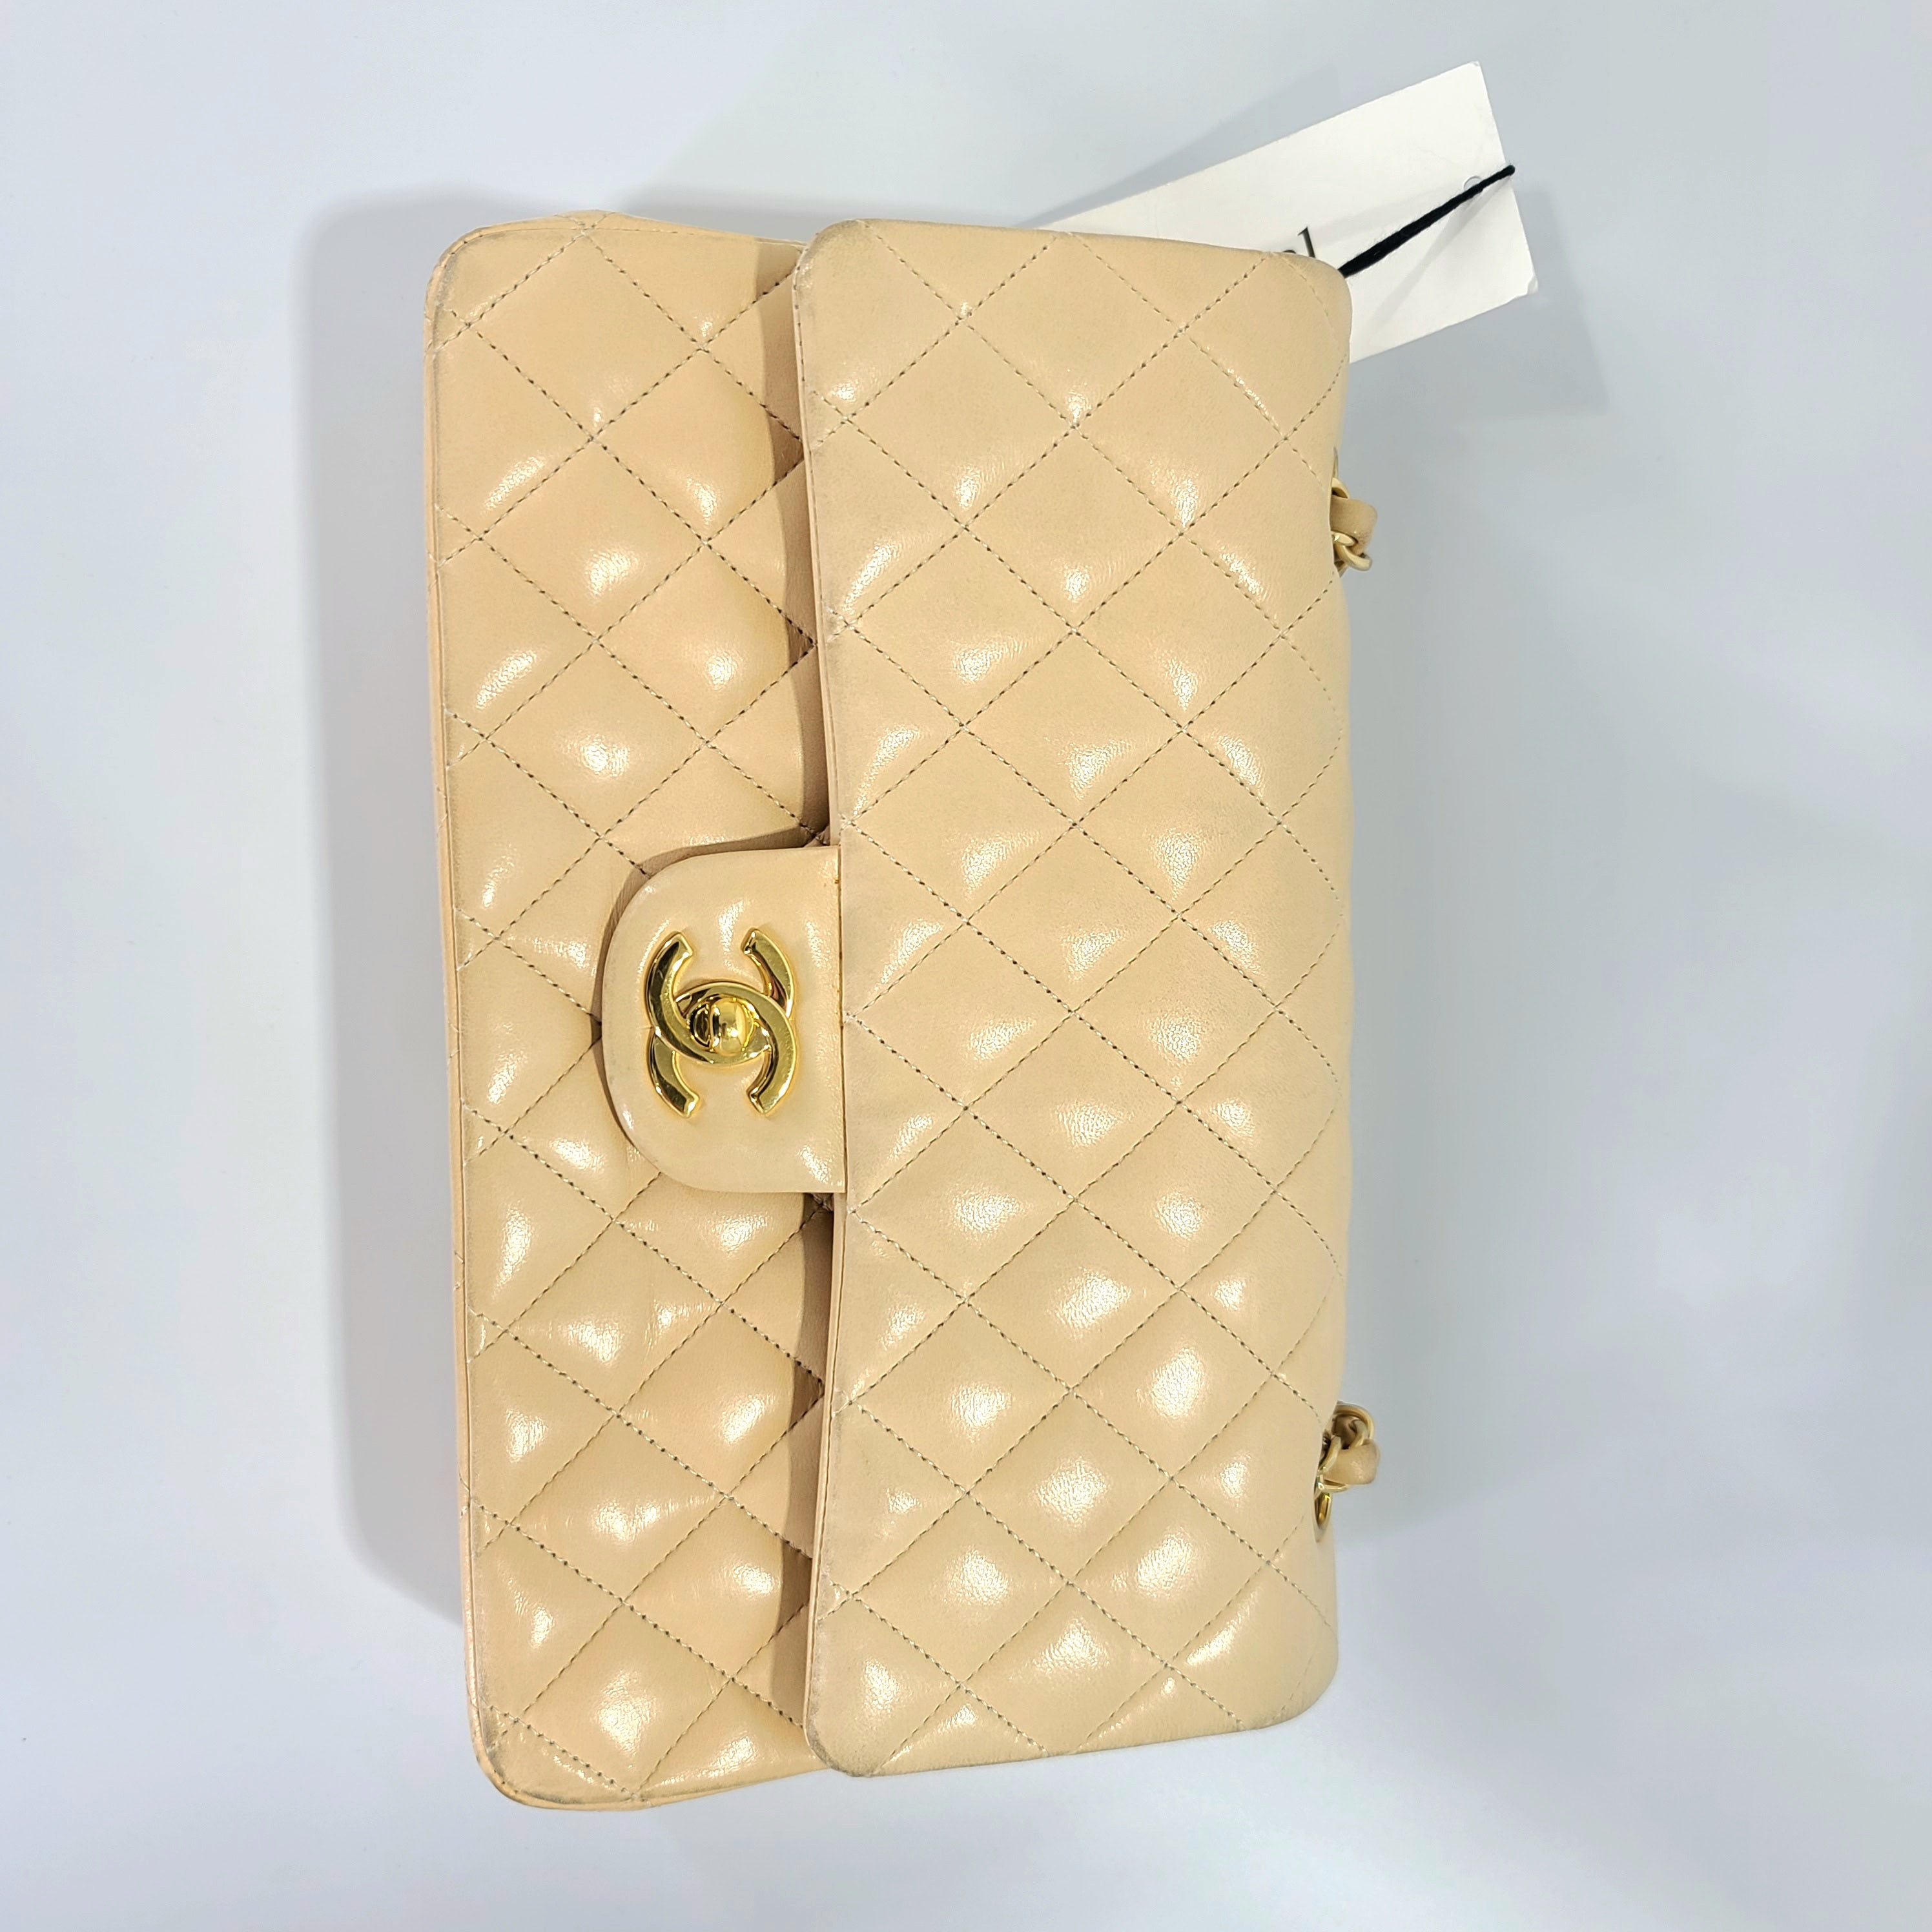 Chanel W Matrasse Flap Chain Shoulder Bag